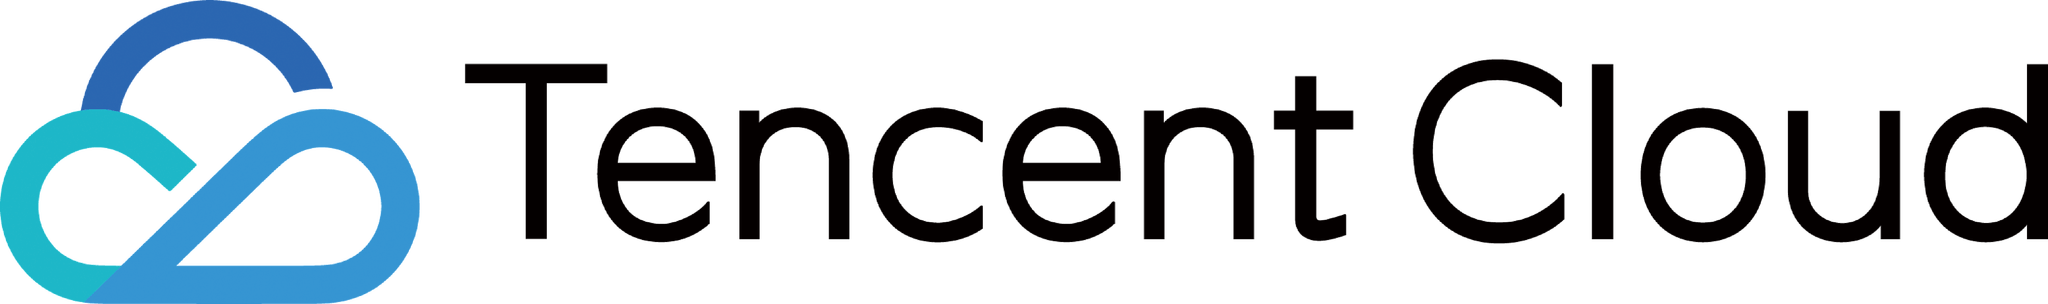 tencent cloud logo high res